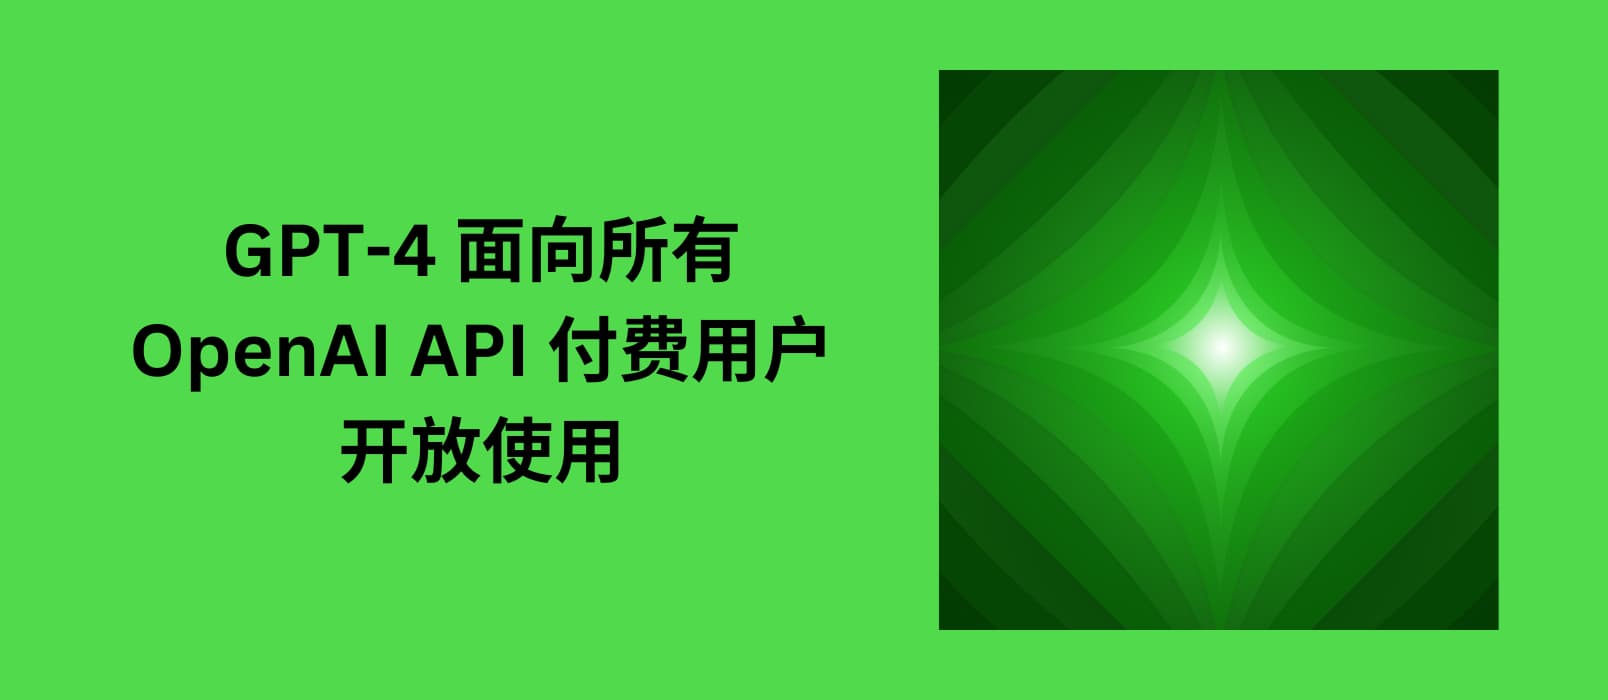 GPT-4 面向所有 OpenAI API 付费用户开放使用 1